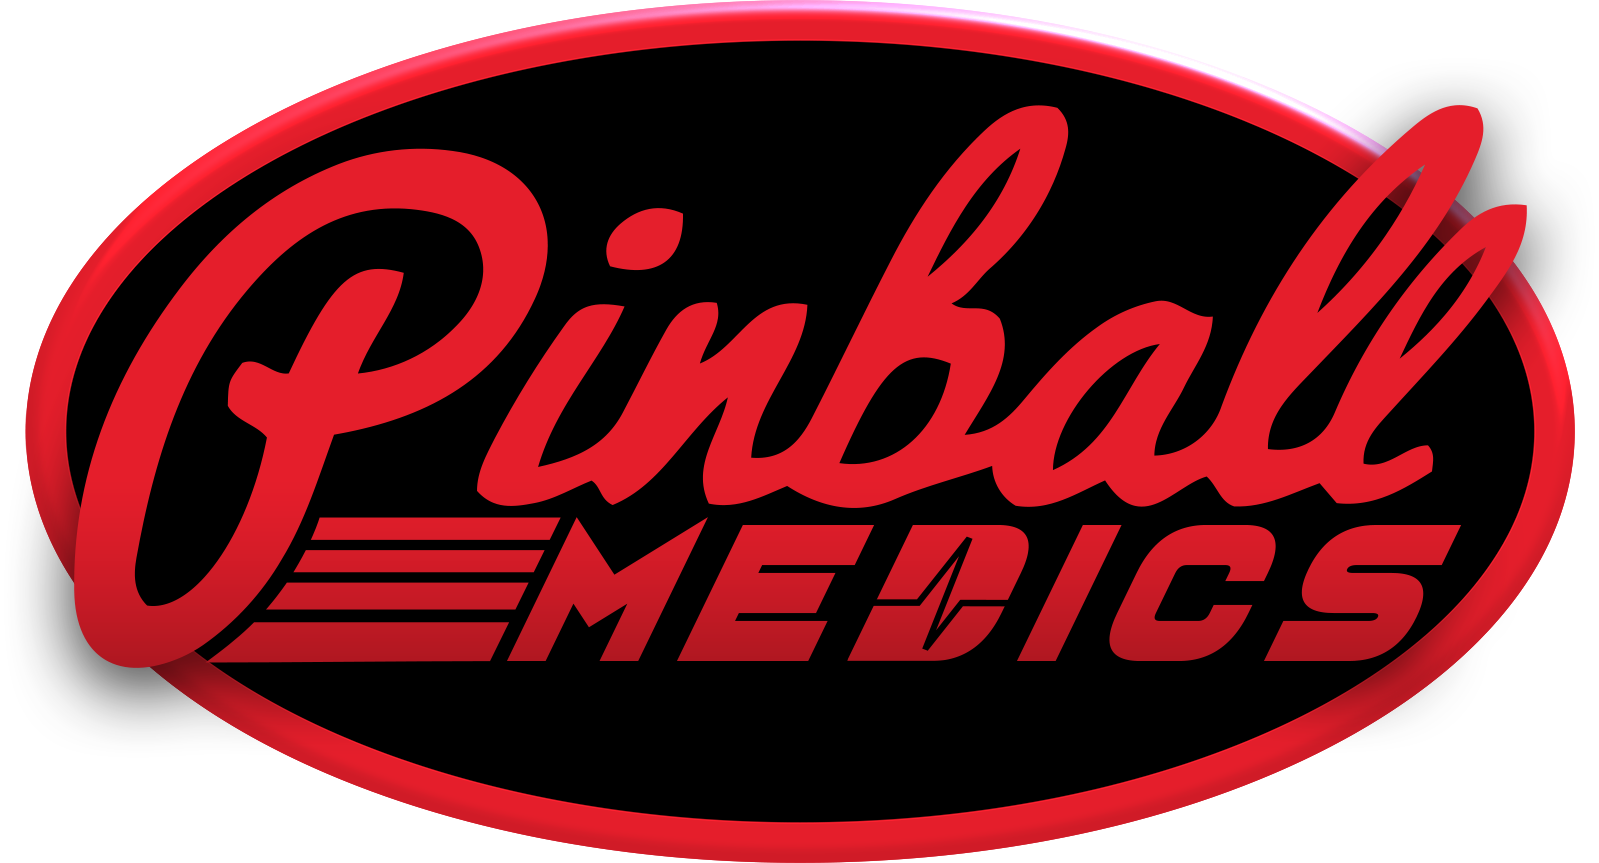 Pinball Medics